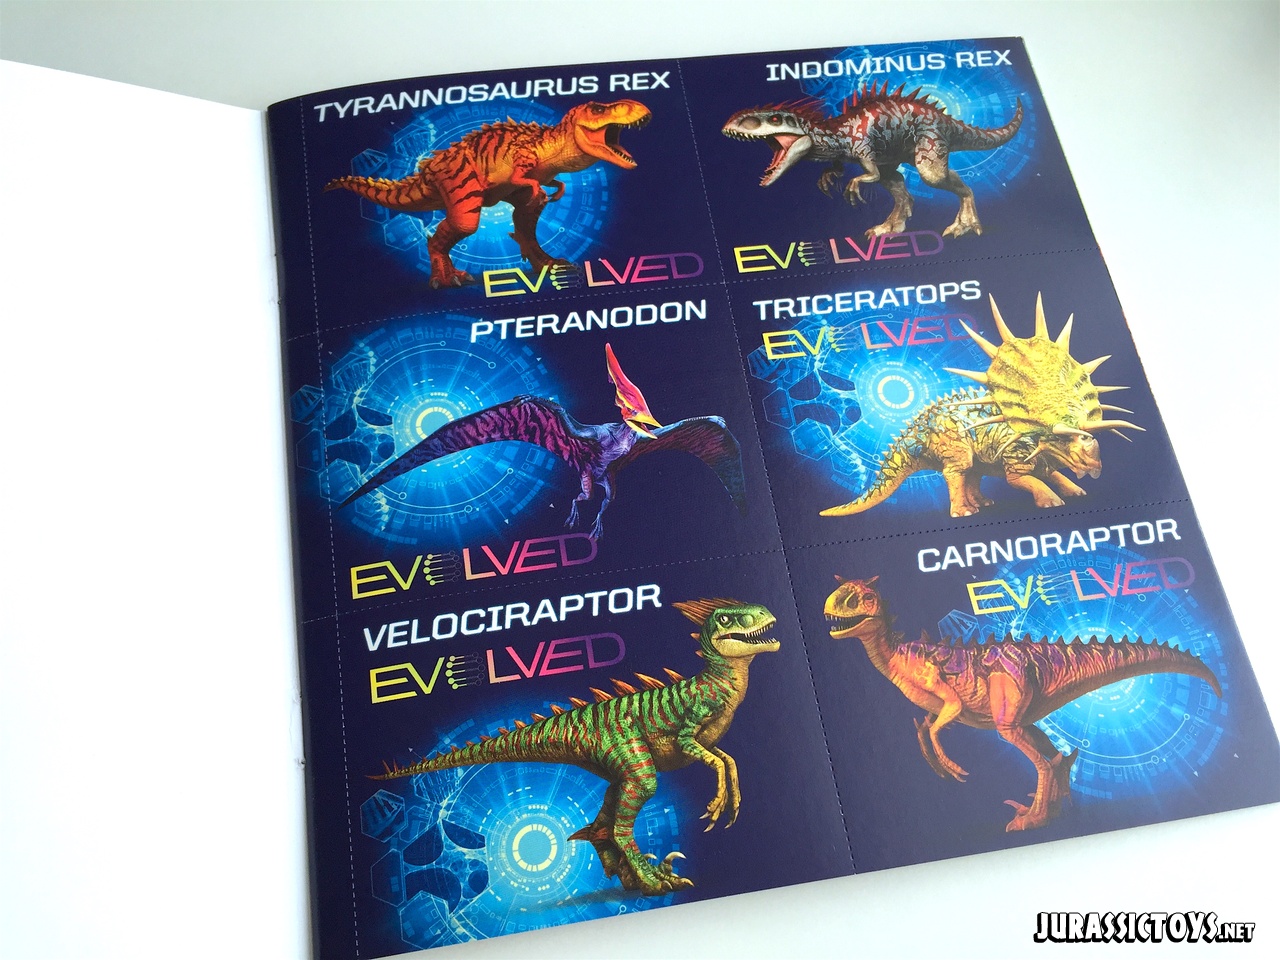 Jurassic World Dino Hybrid book